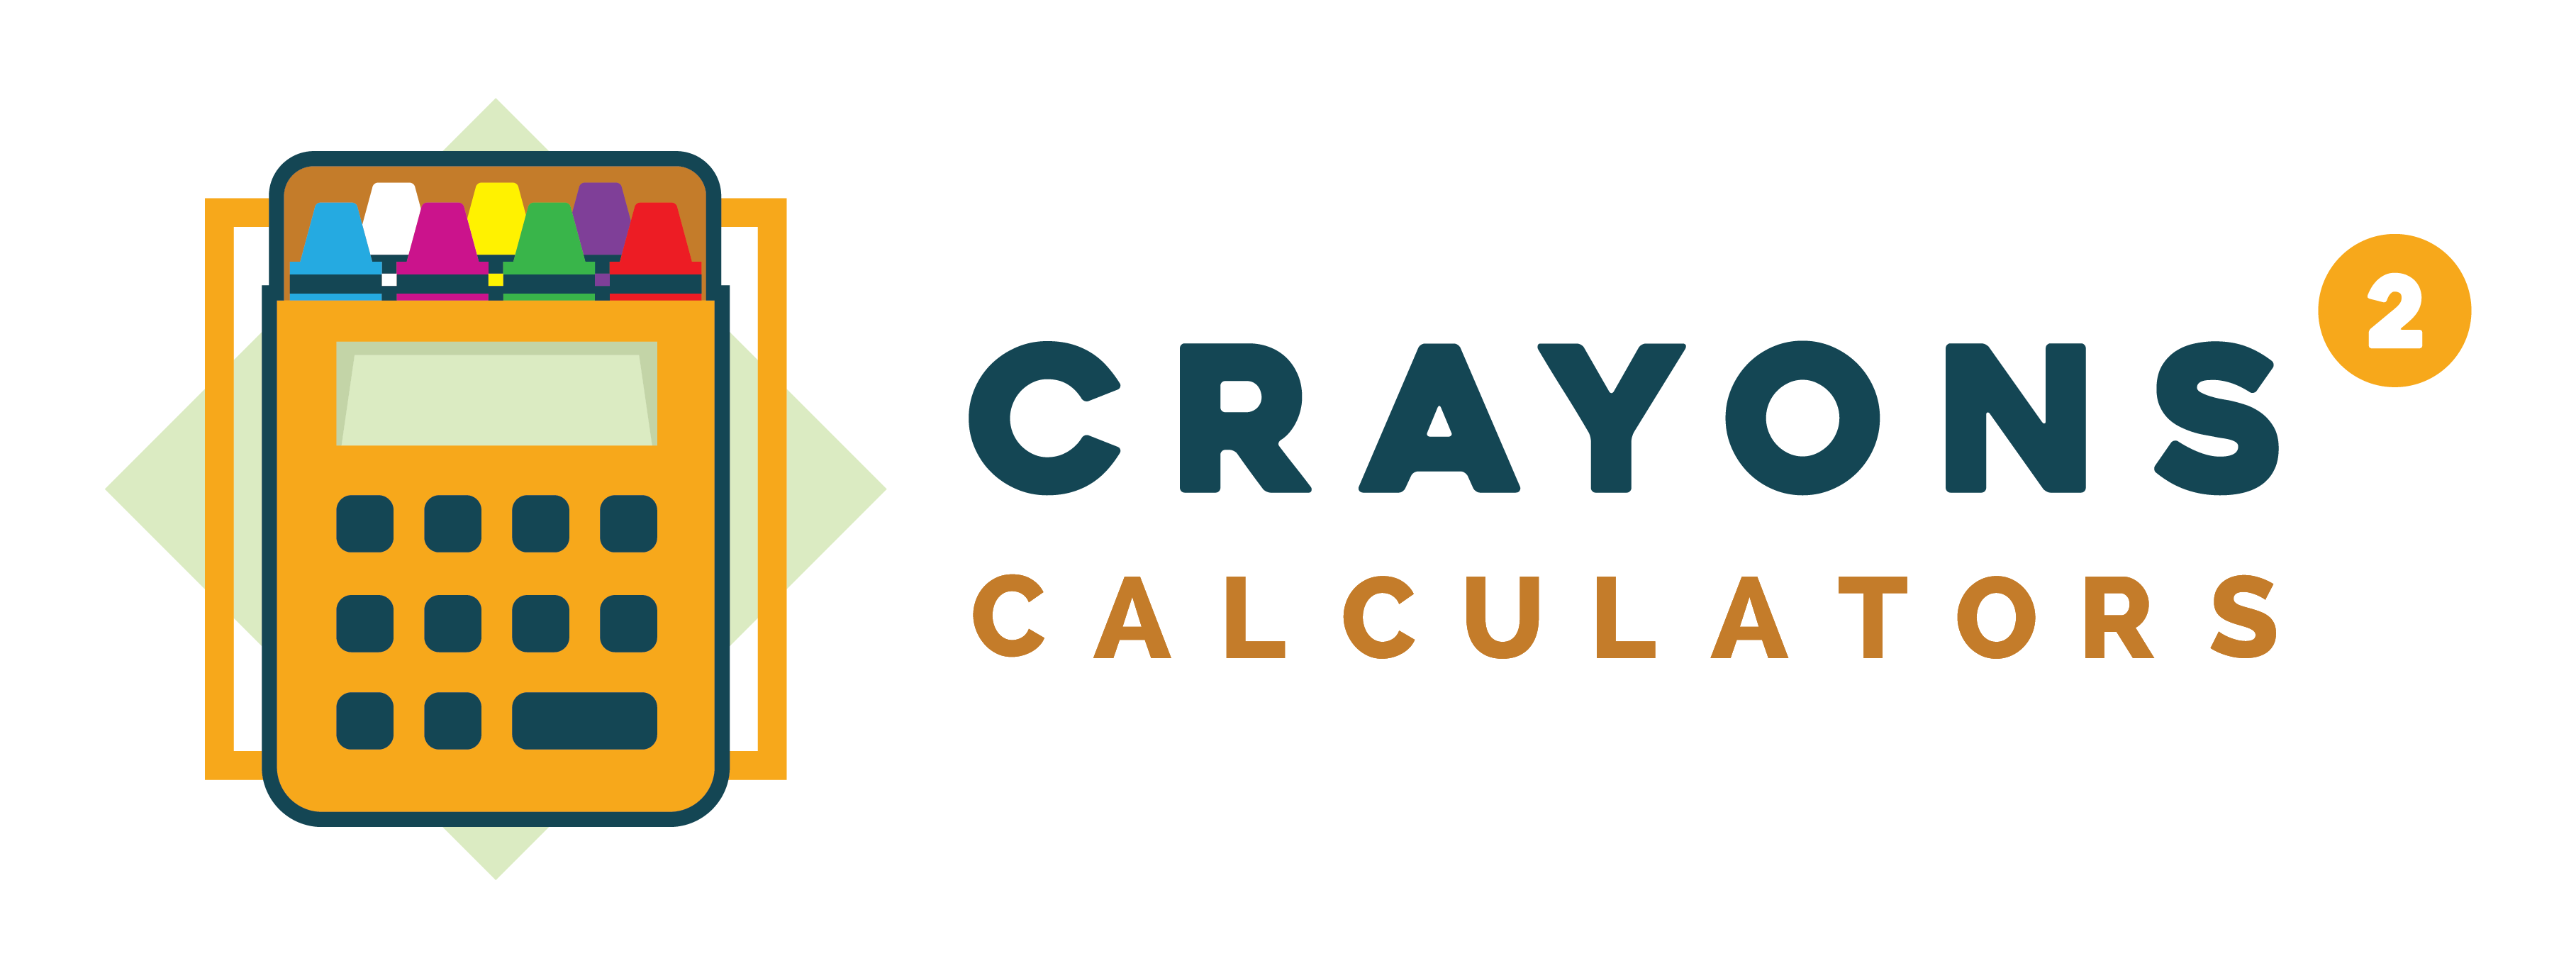 Crayons2Calculators logo